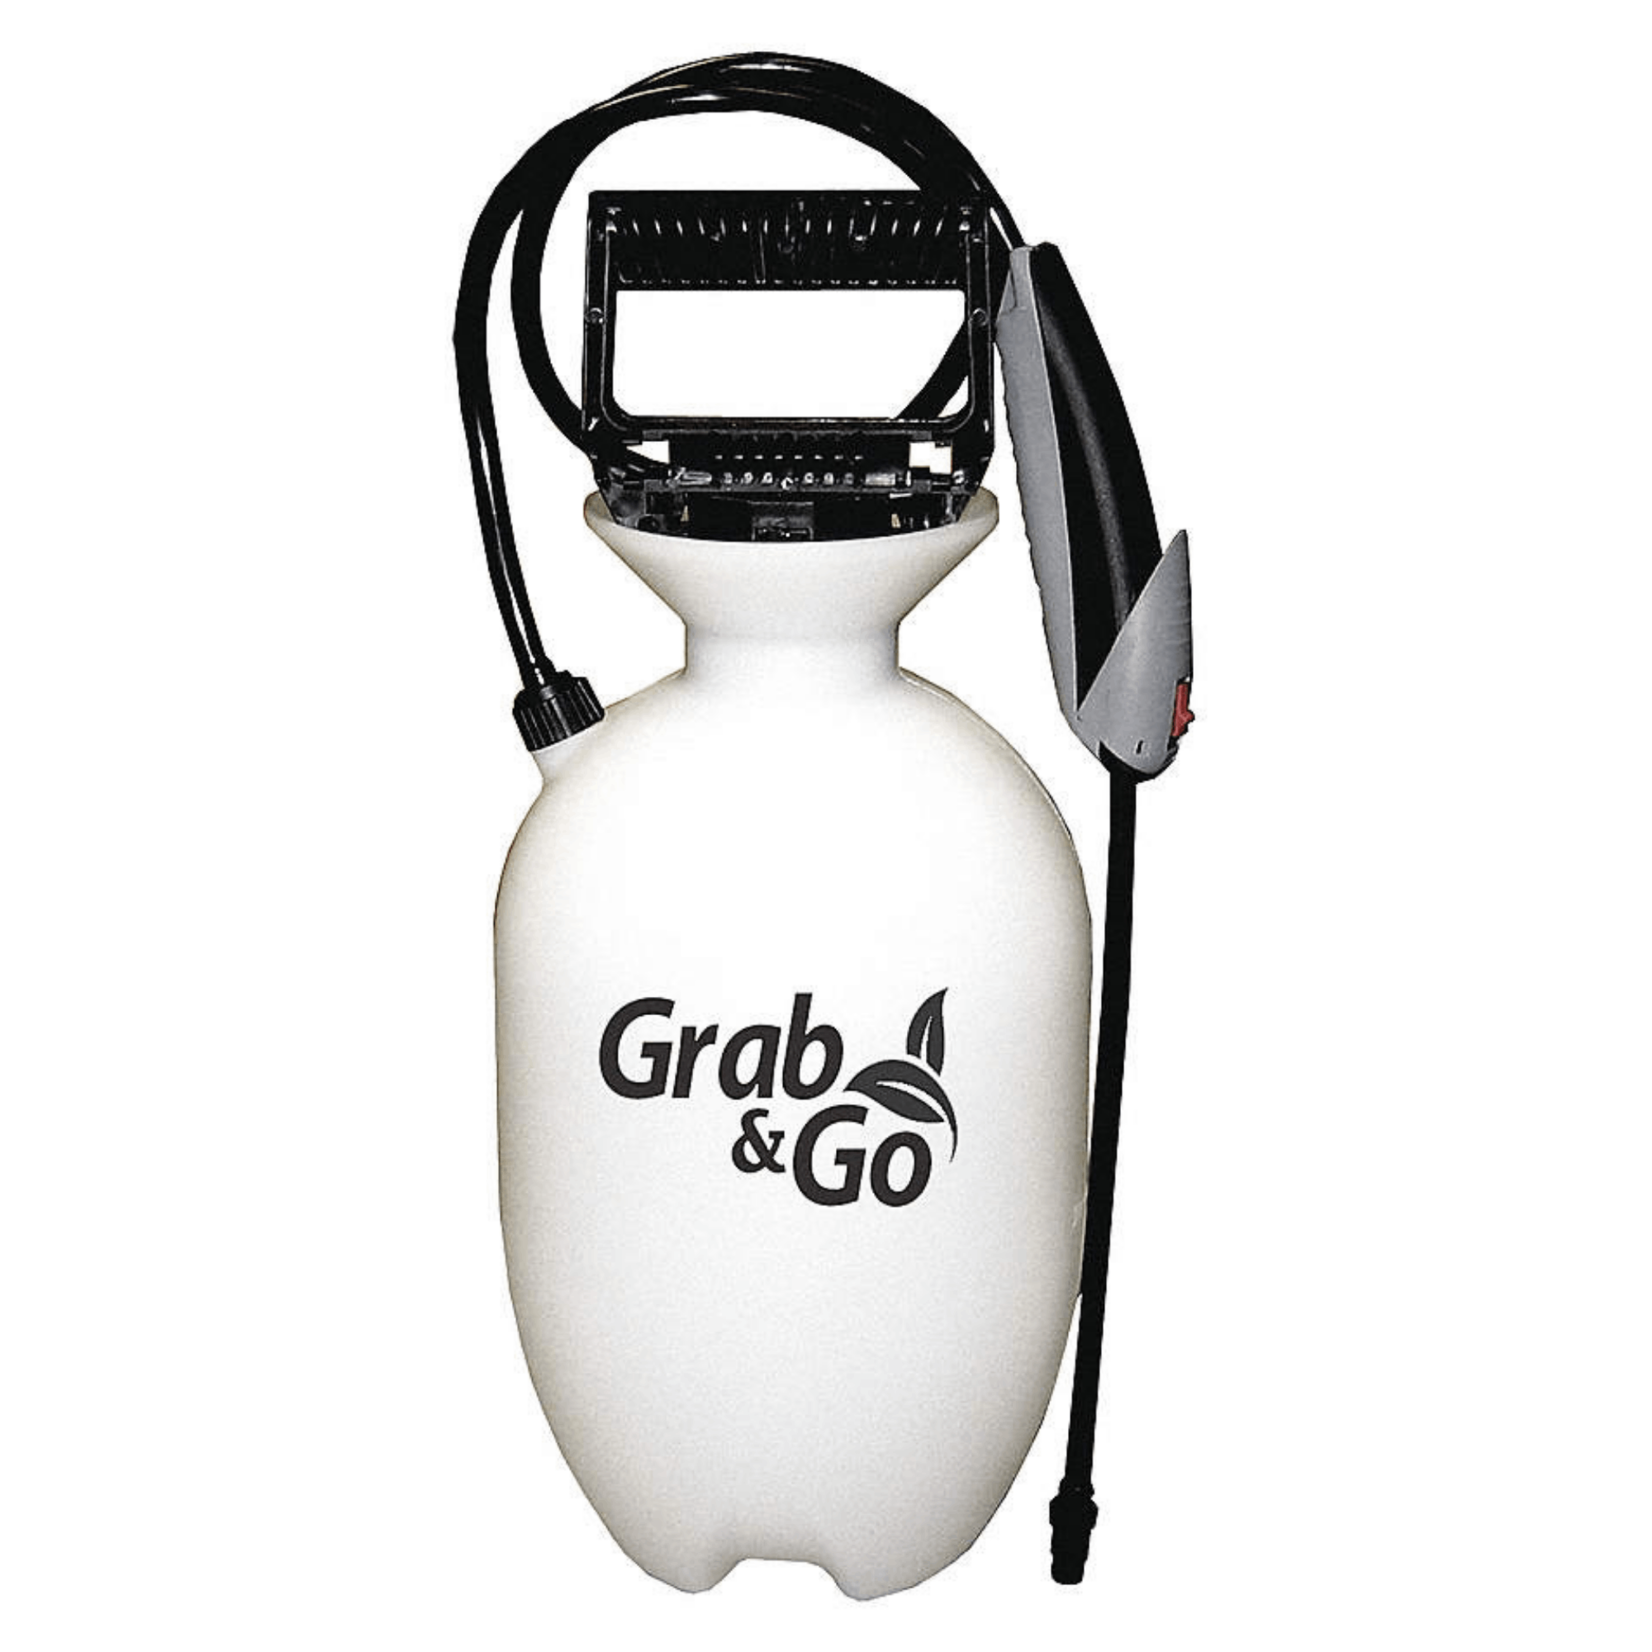 Grab & Go Grab & Go Sprayer 2 Gallon